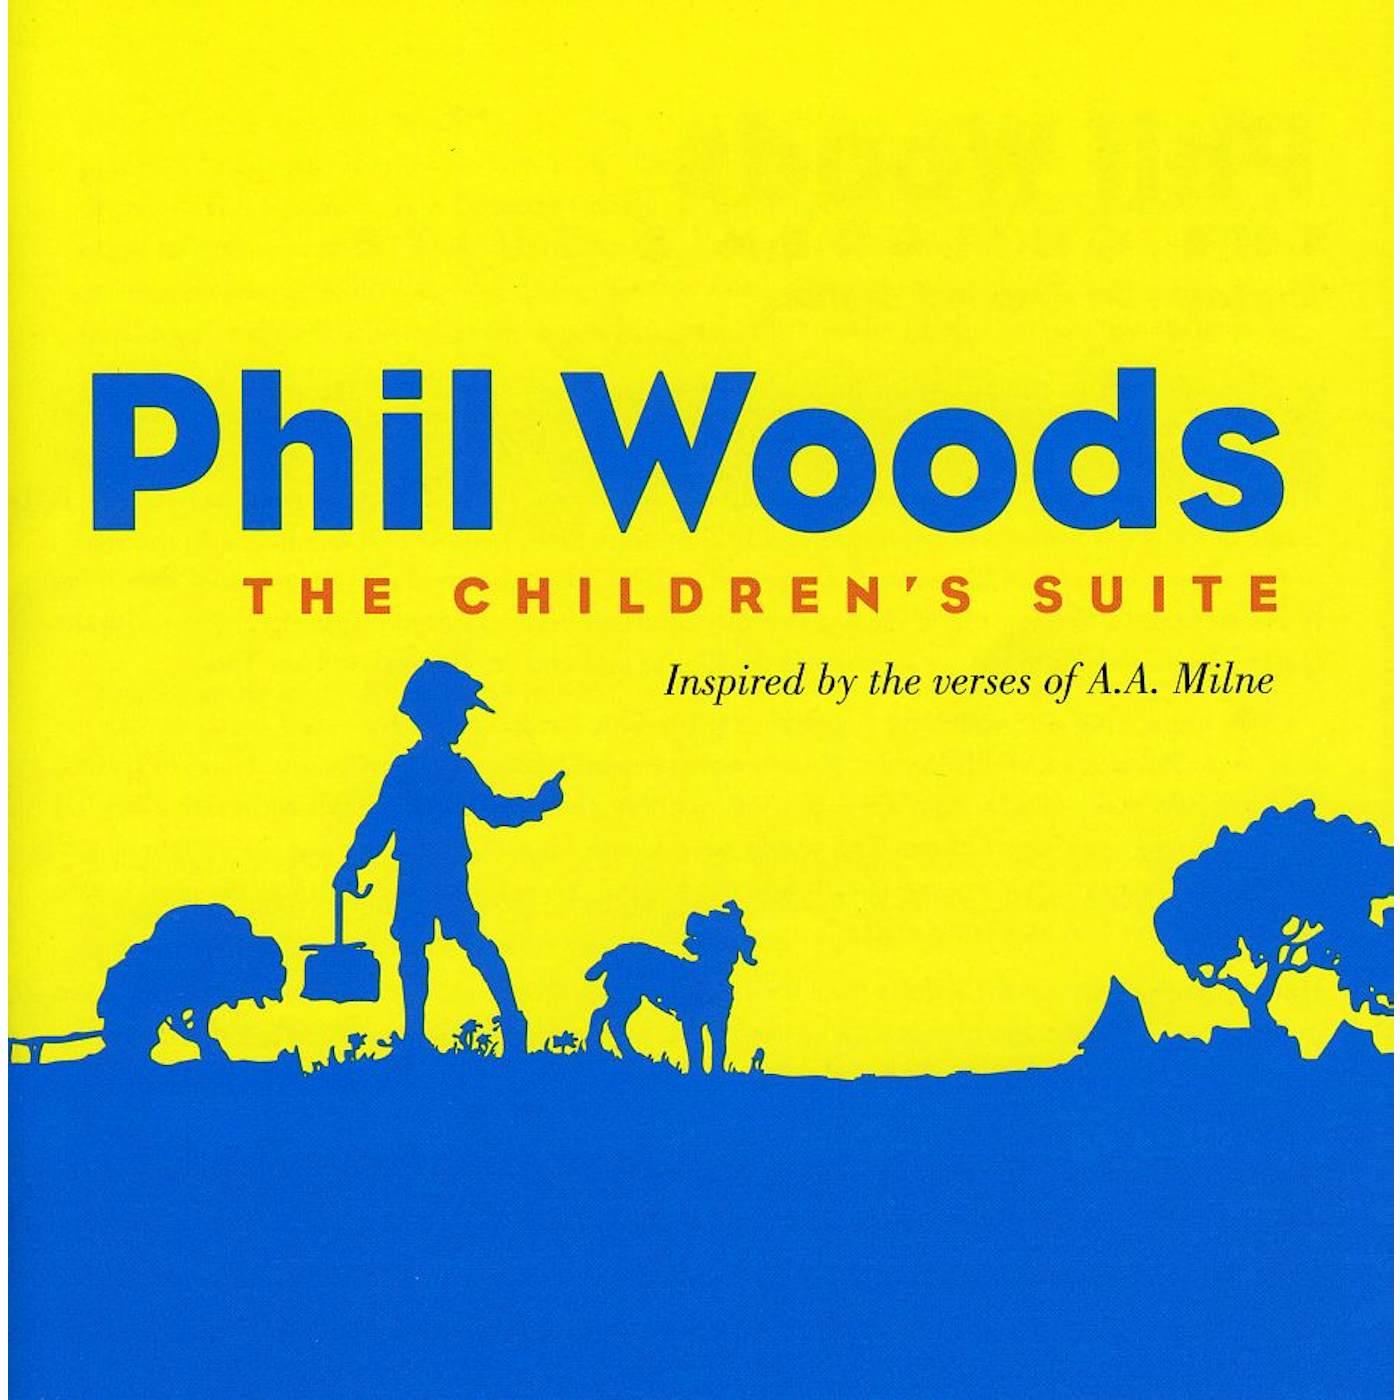 Phil Woods CHILDREN'S SUITE CD